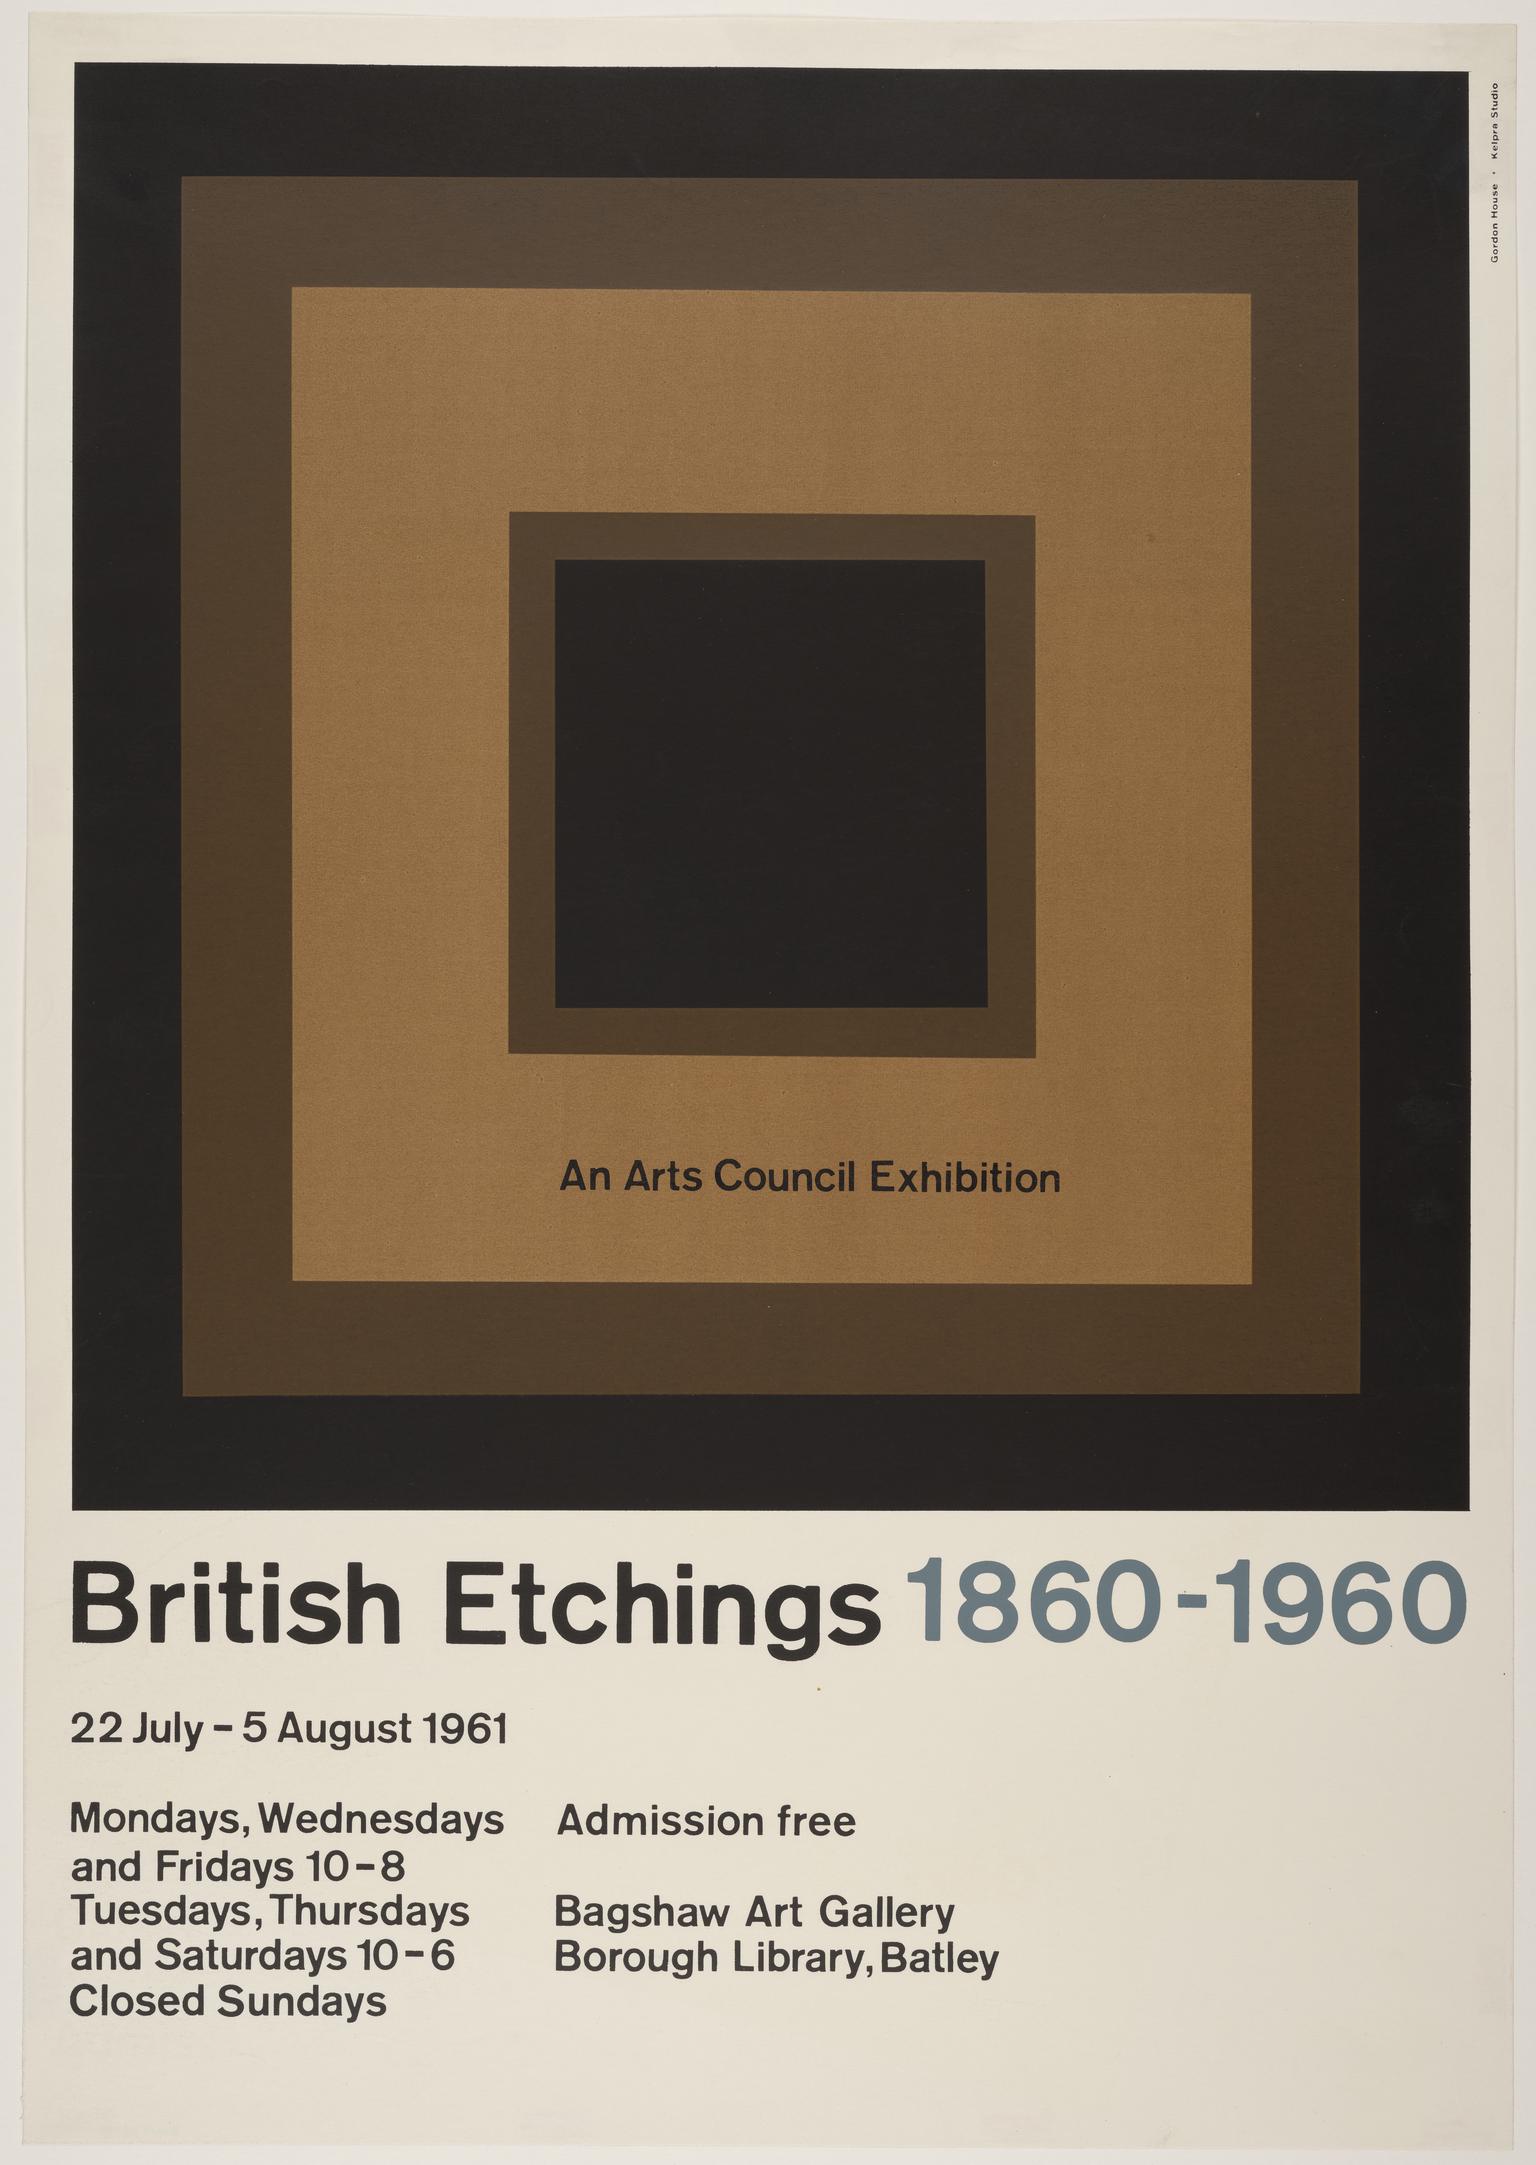 British Etchings Poster